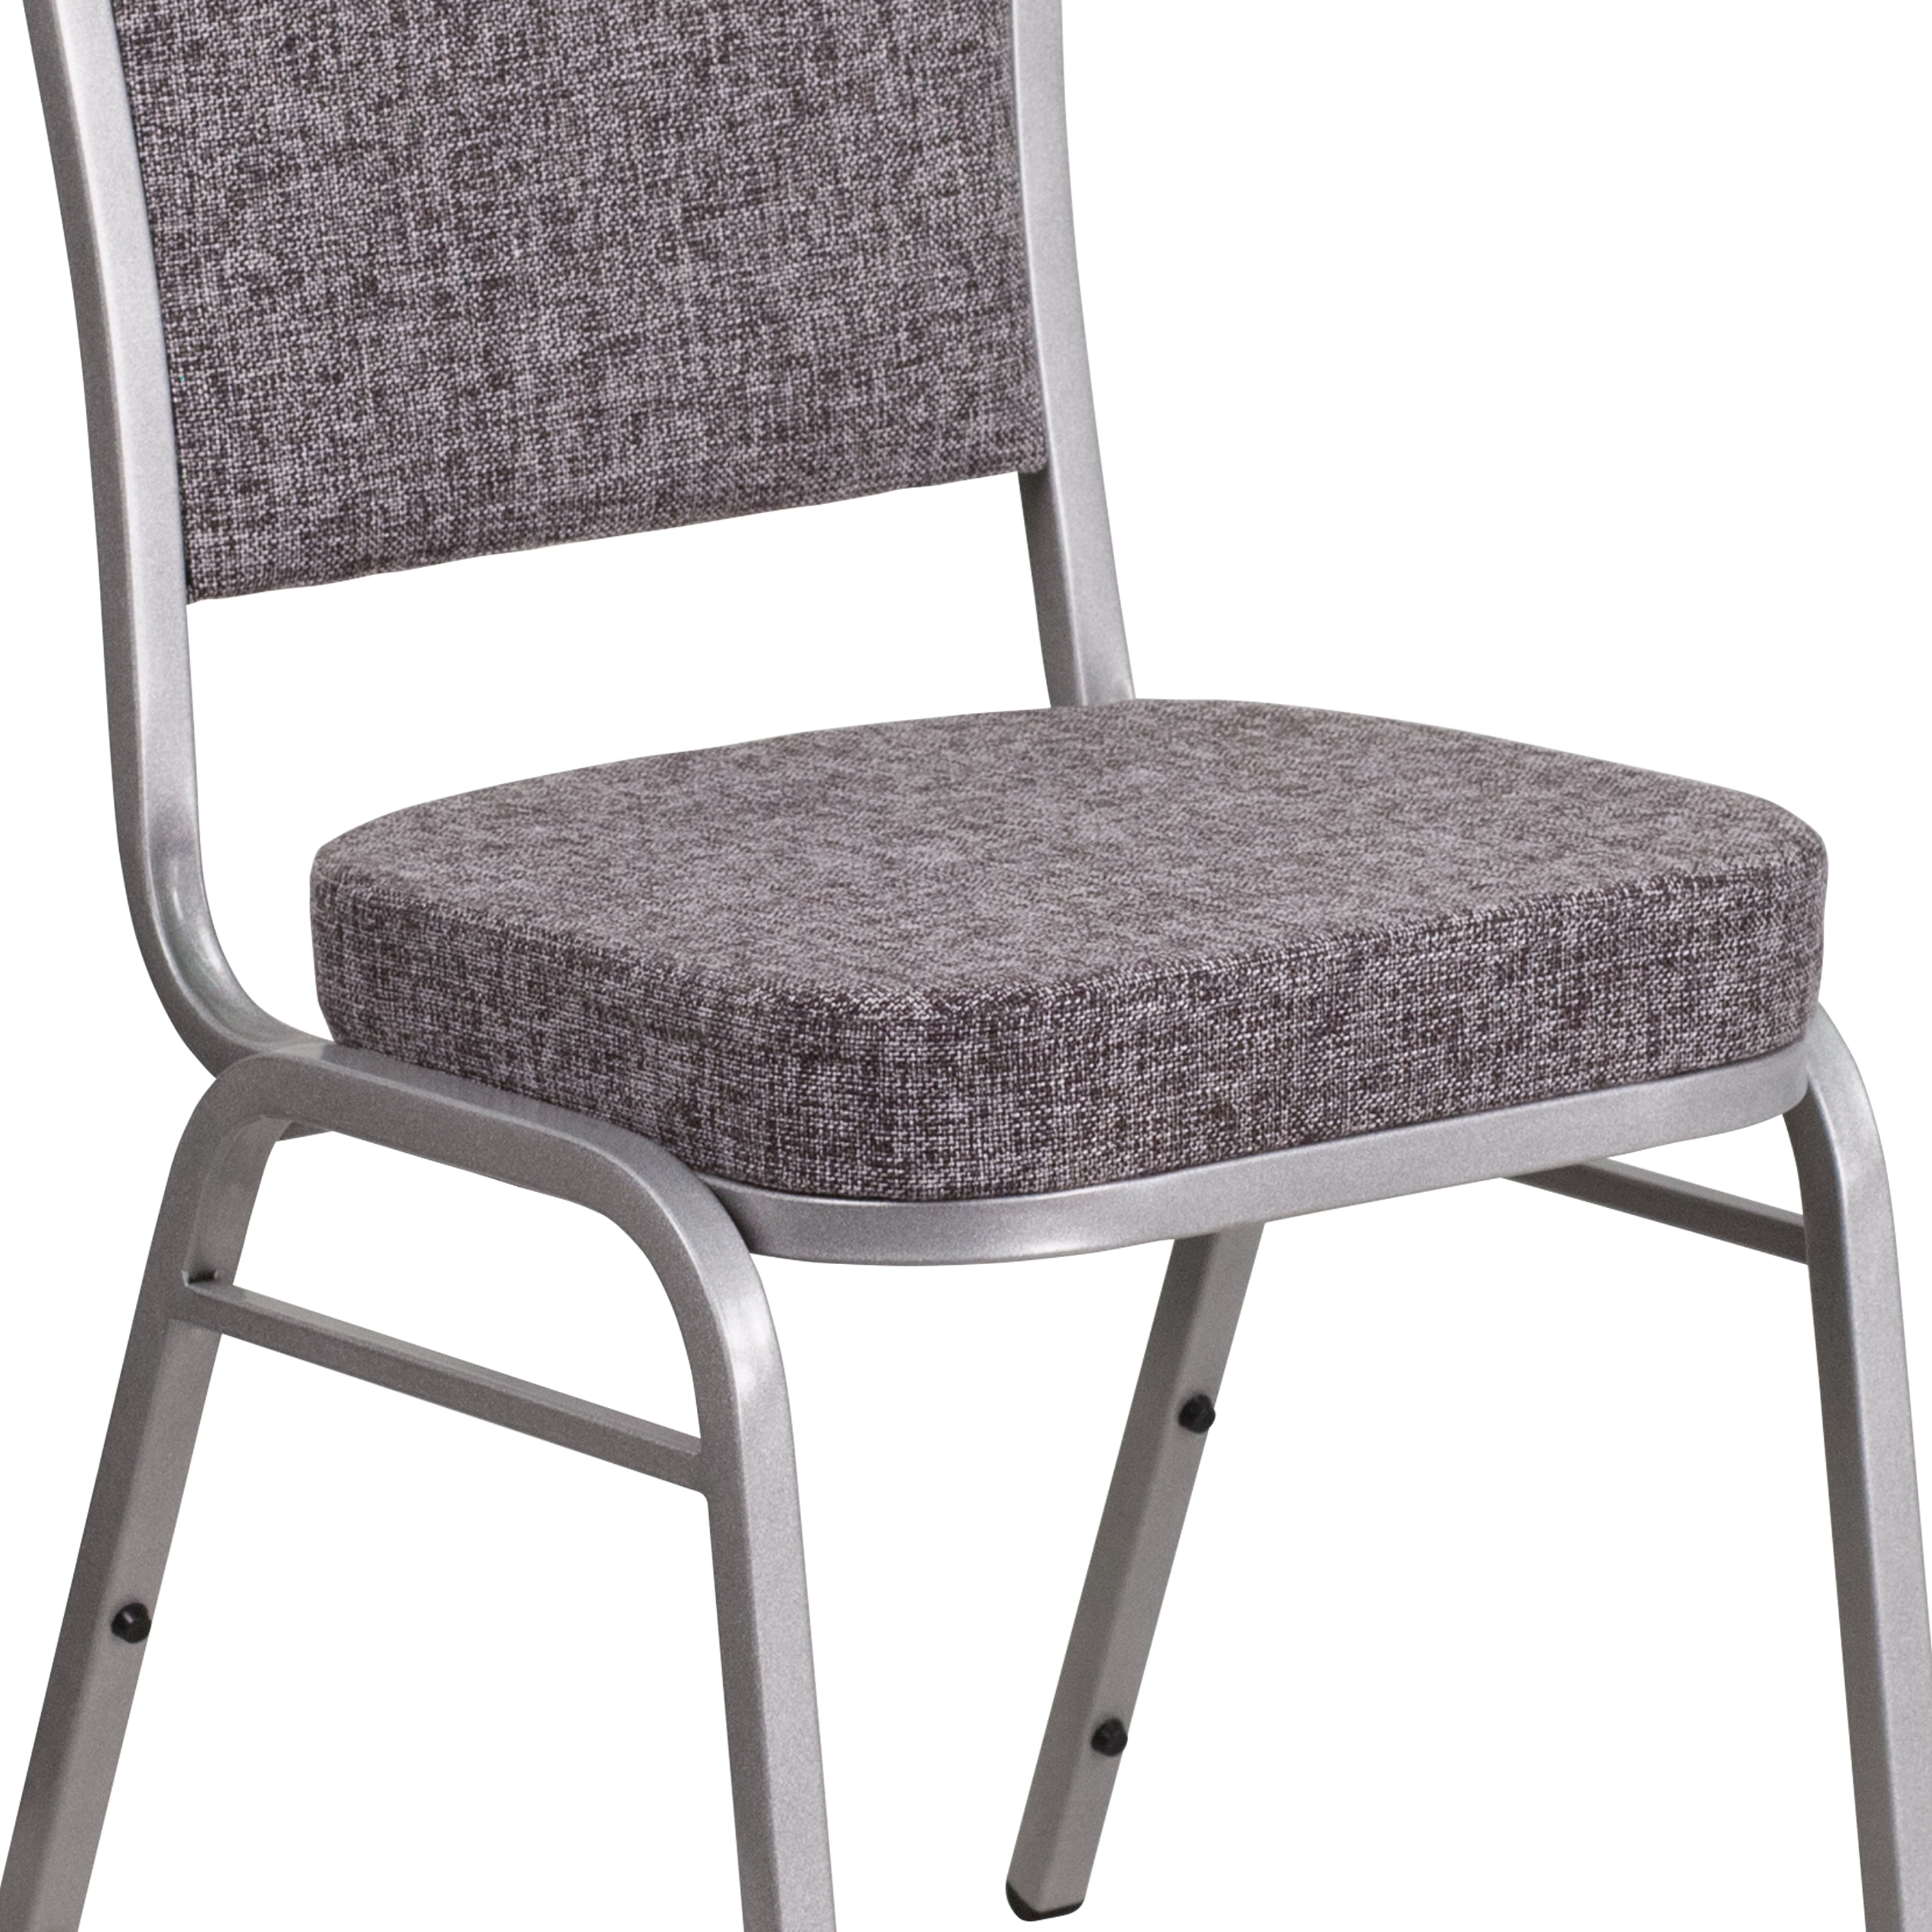 HERCULES Series Crown Back Stacking Banquet Chair in Burgu Flash Furniture 4 Pk 